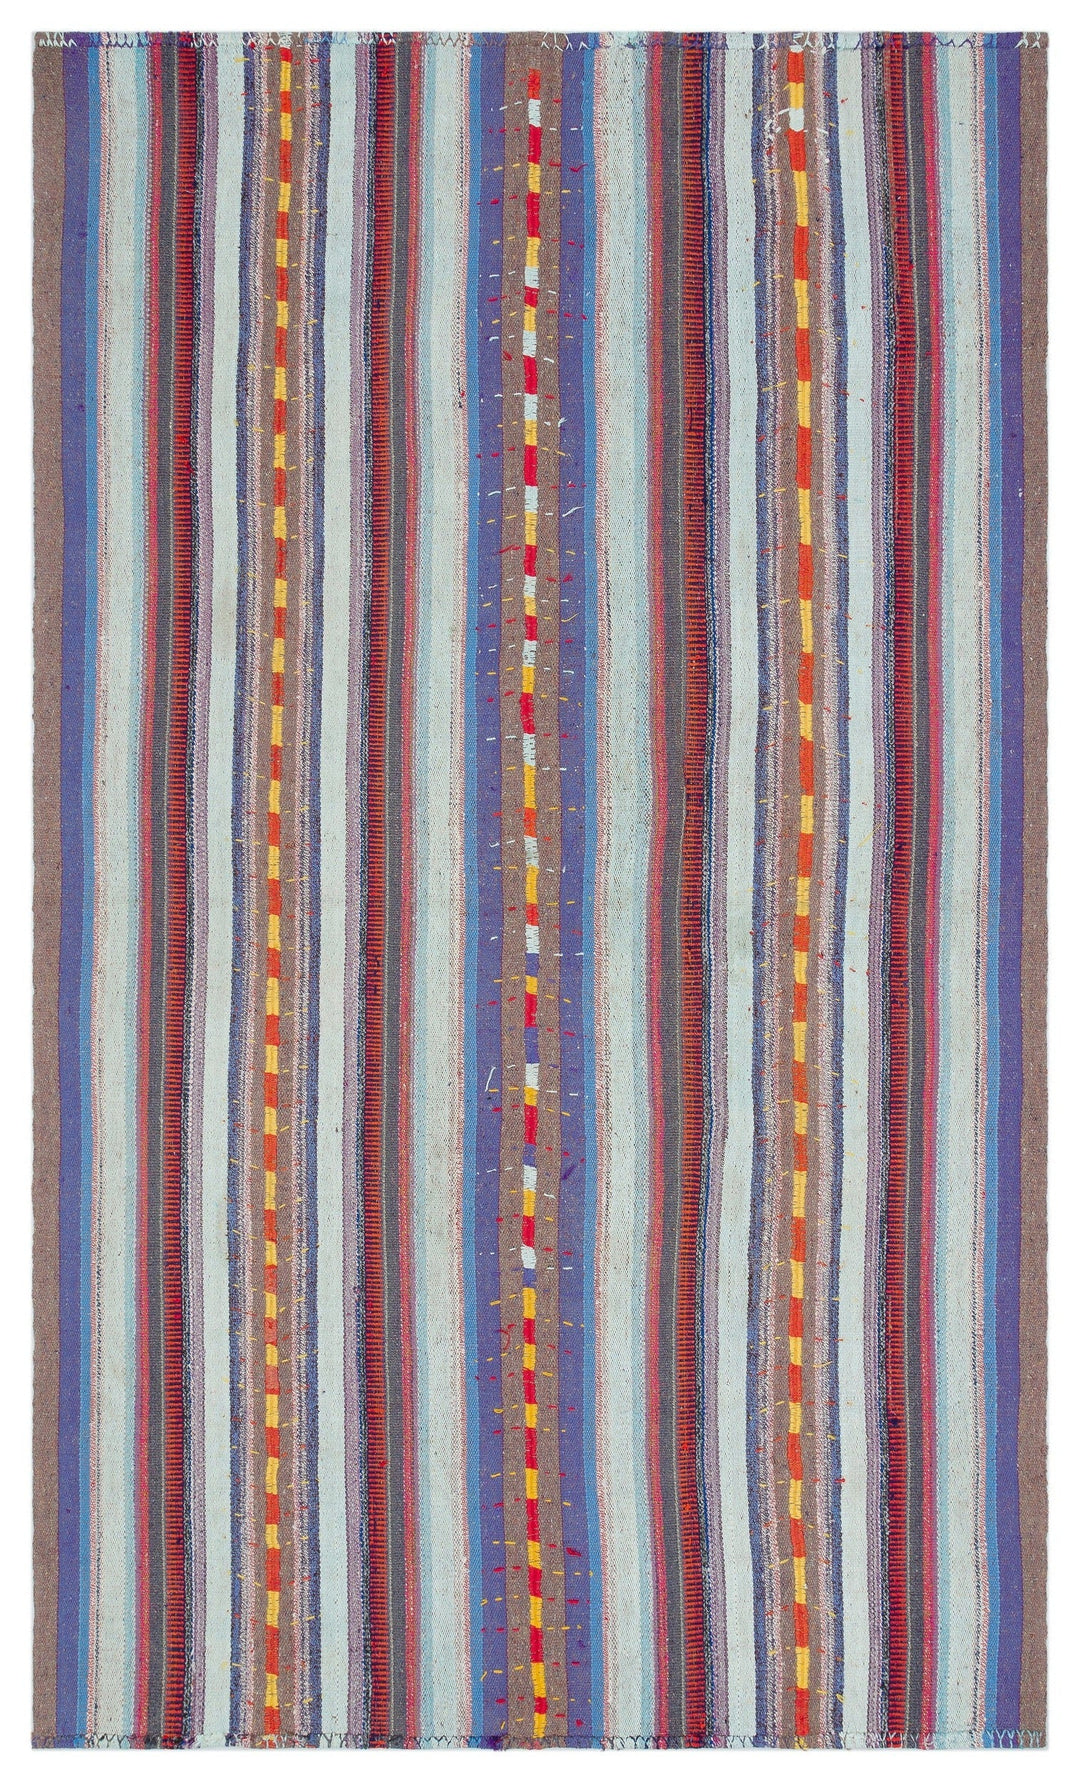 Cretan Beige Striped Wool Hand-Woven Carpet 146 x 250